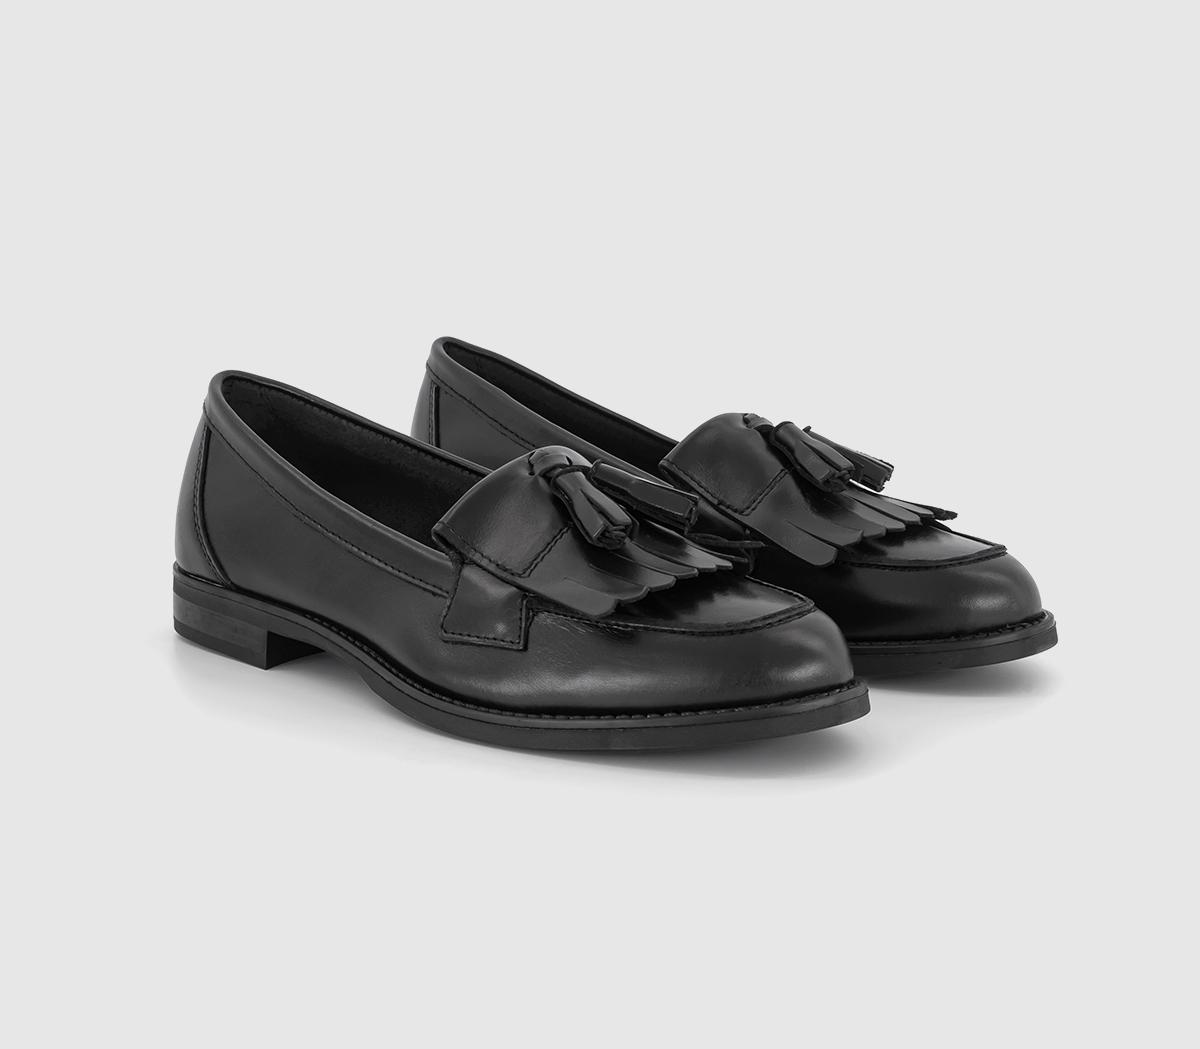 OFFICE Womens Fitz Tassle Fringe Loafers Black Leather, 4